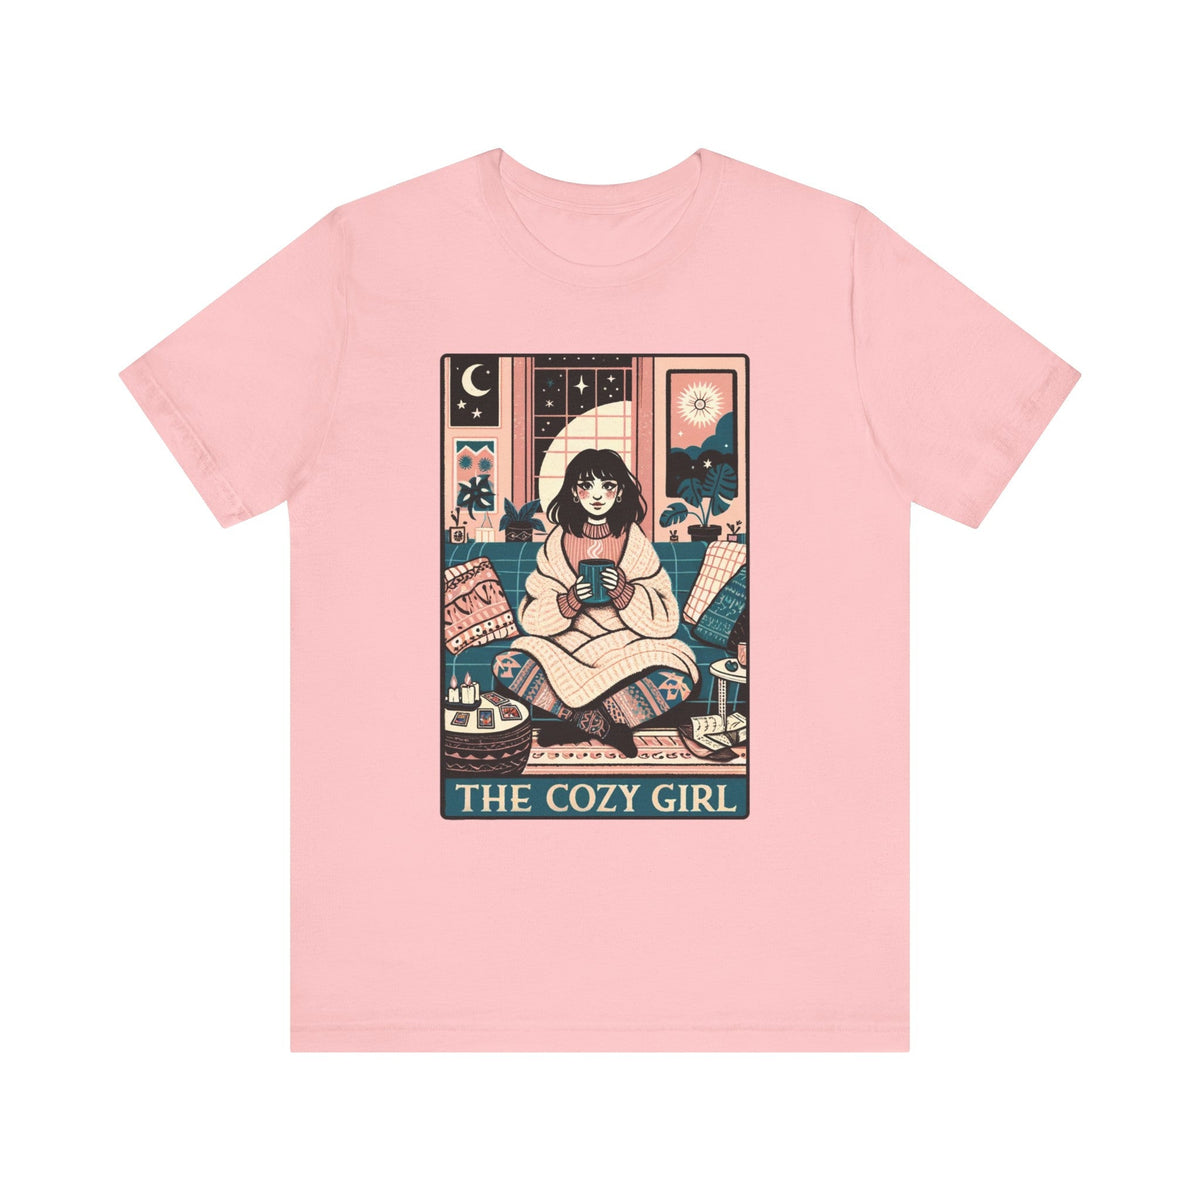 The Cozy Girl Night Tarot Card Short Sleeve Tee - Goth Cloth Co.T - Shirt24491499194330553280